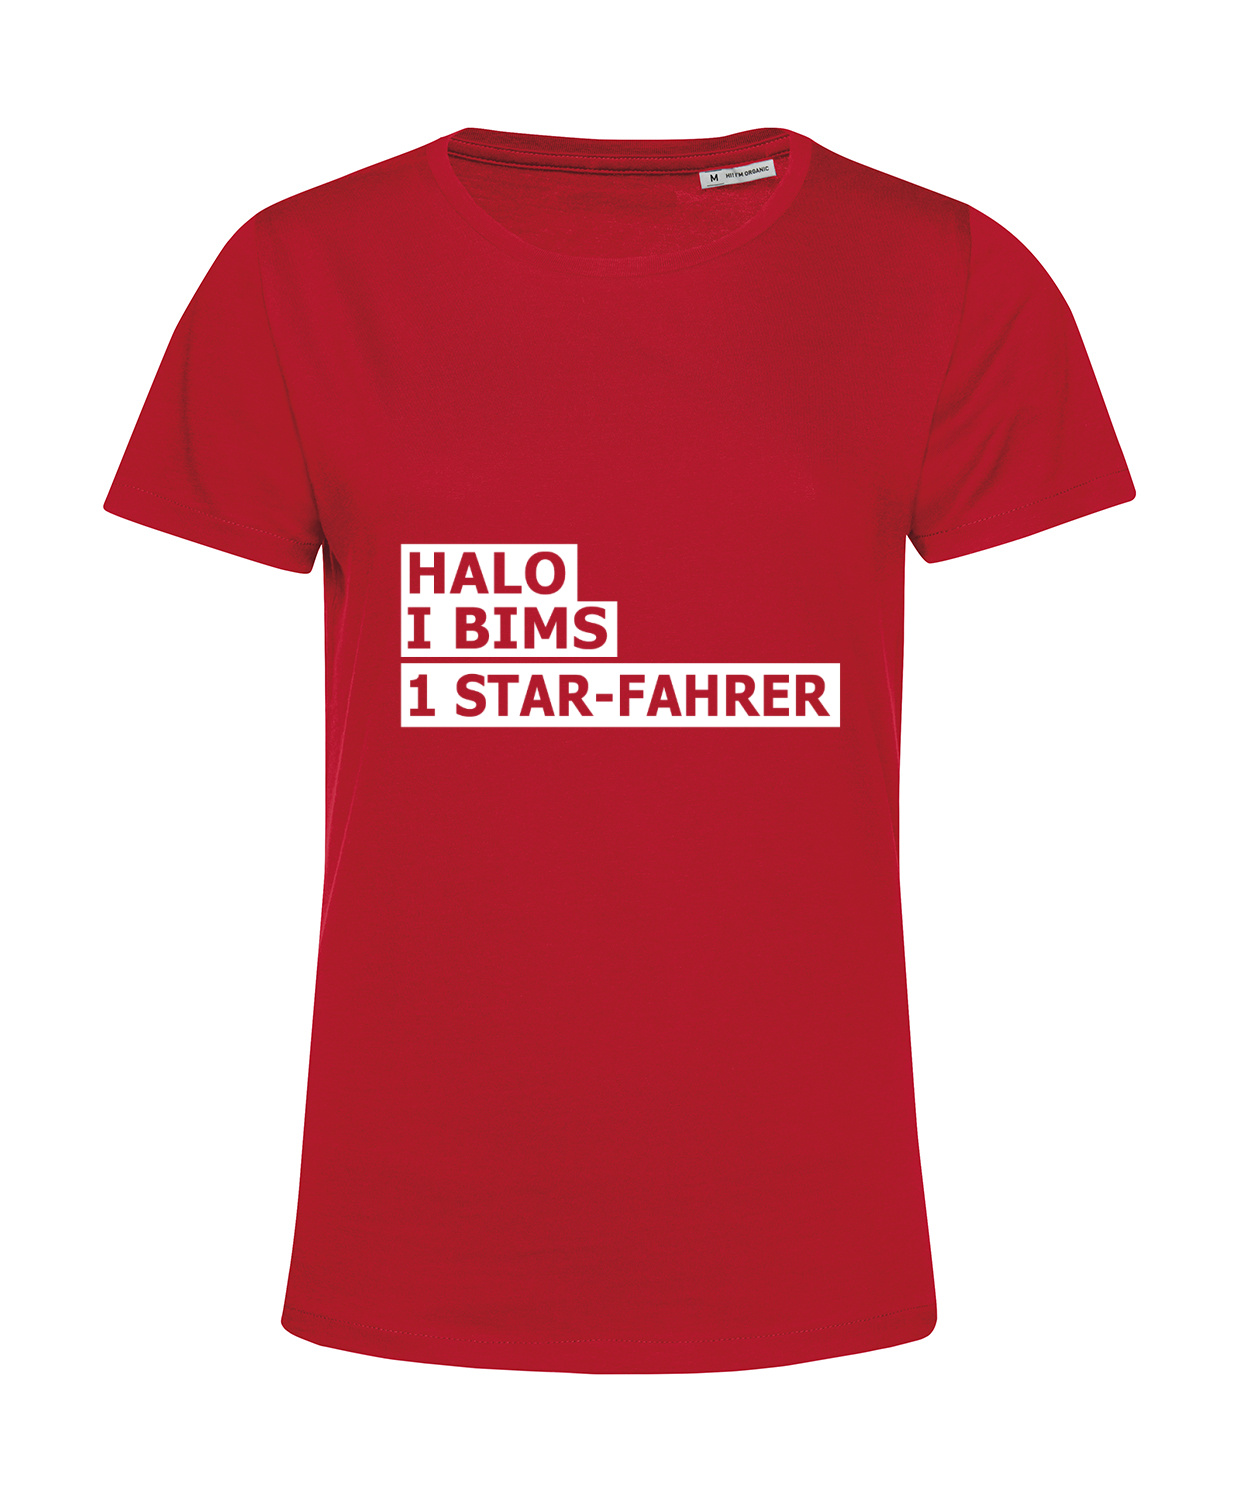 Nachhaltiges T-Shirt Damen 2Takter - Halo I bims 1 Star-Fahrer